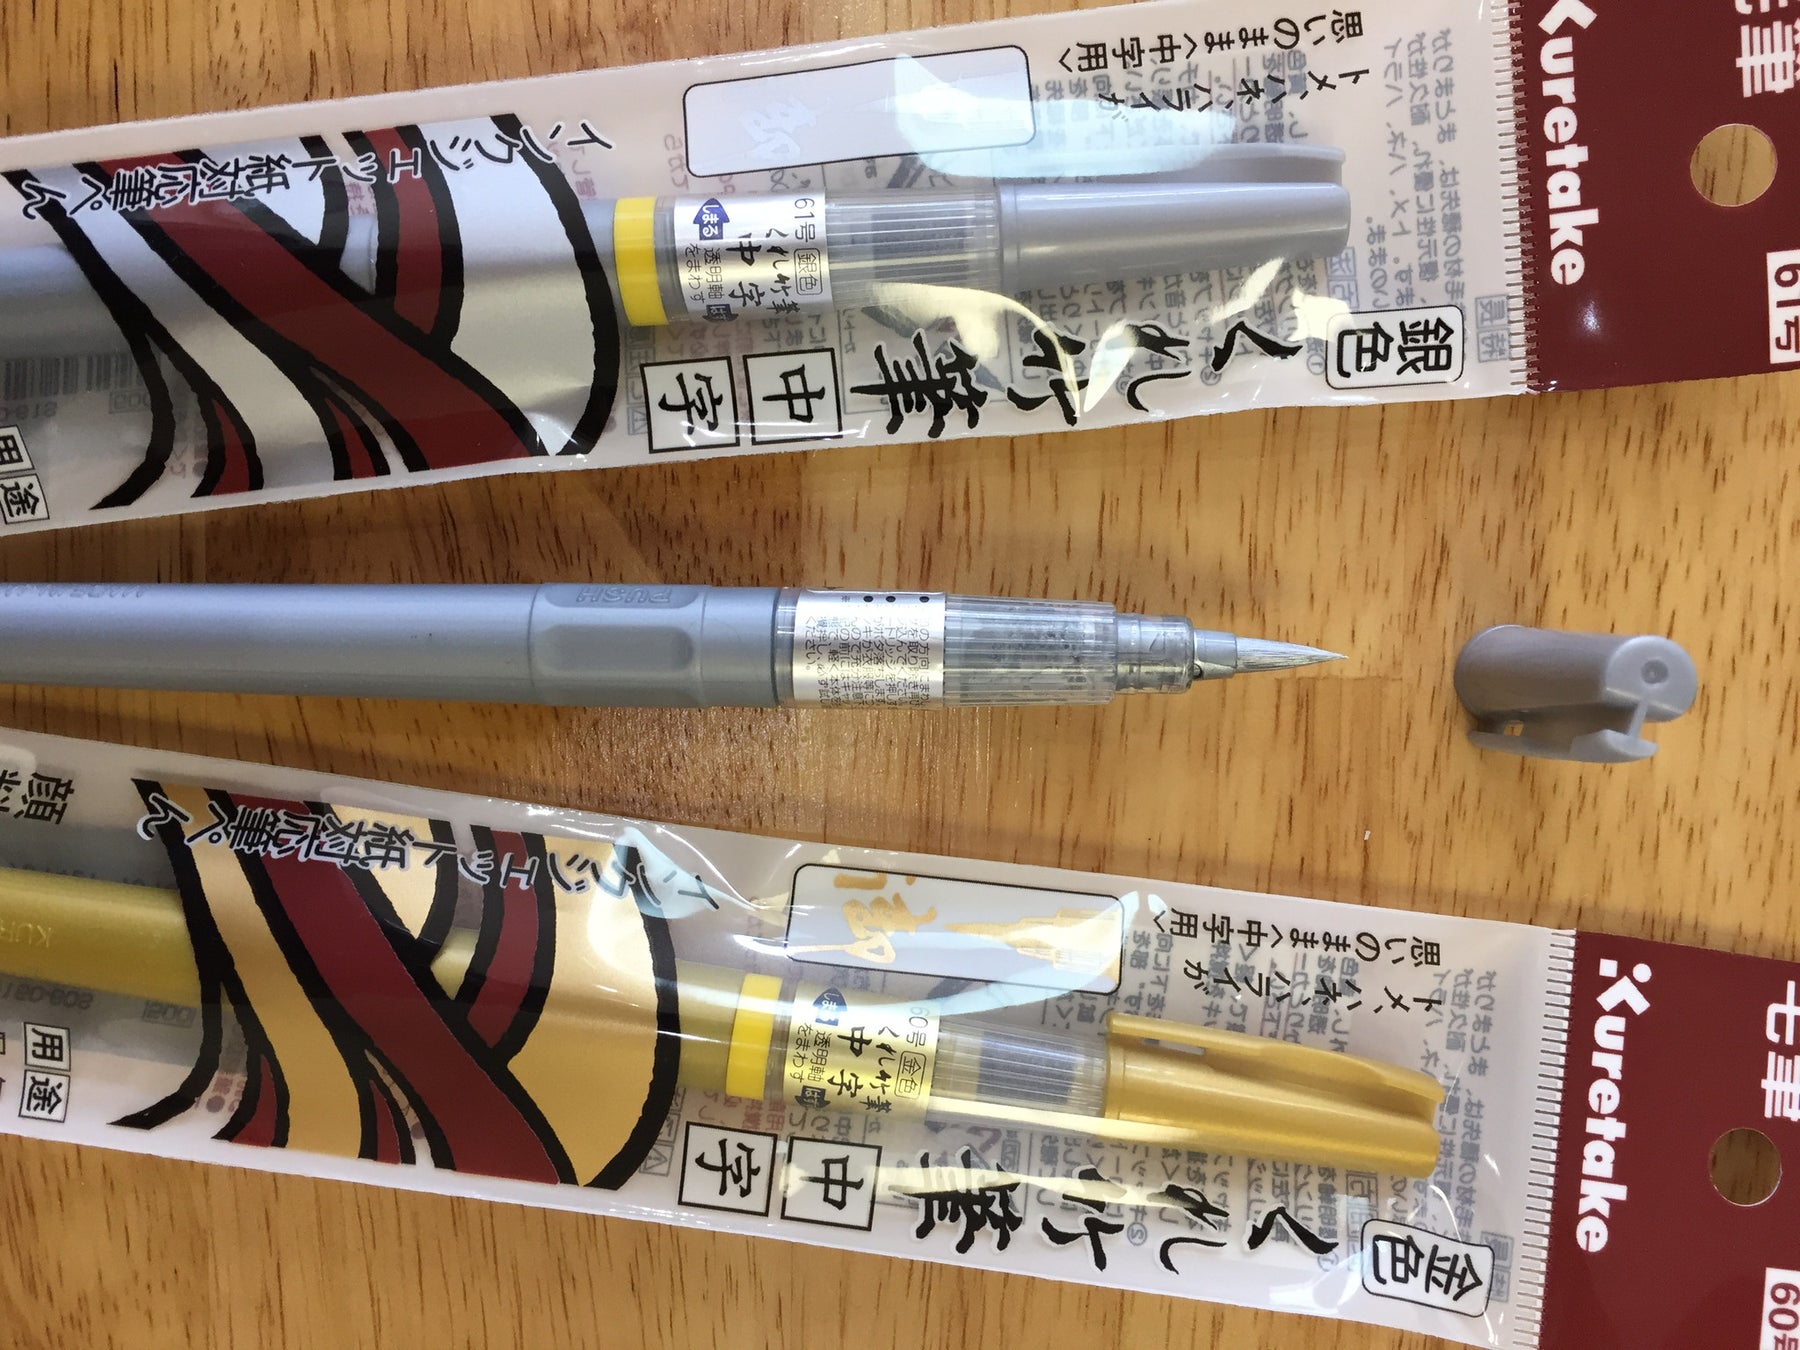 Kuretake Brush Pen - Fountain Brush Pen 